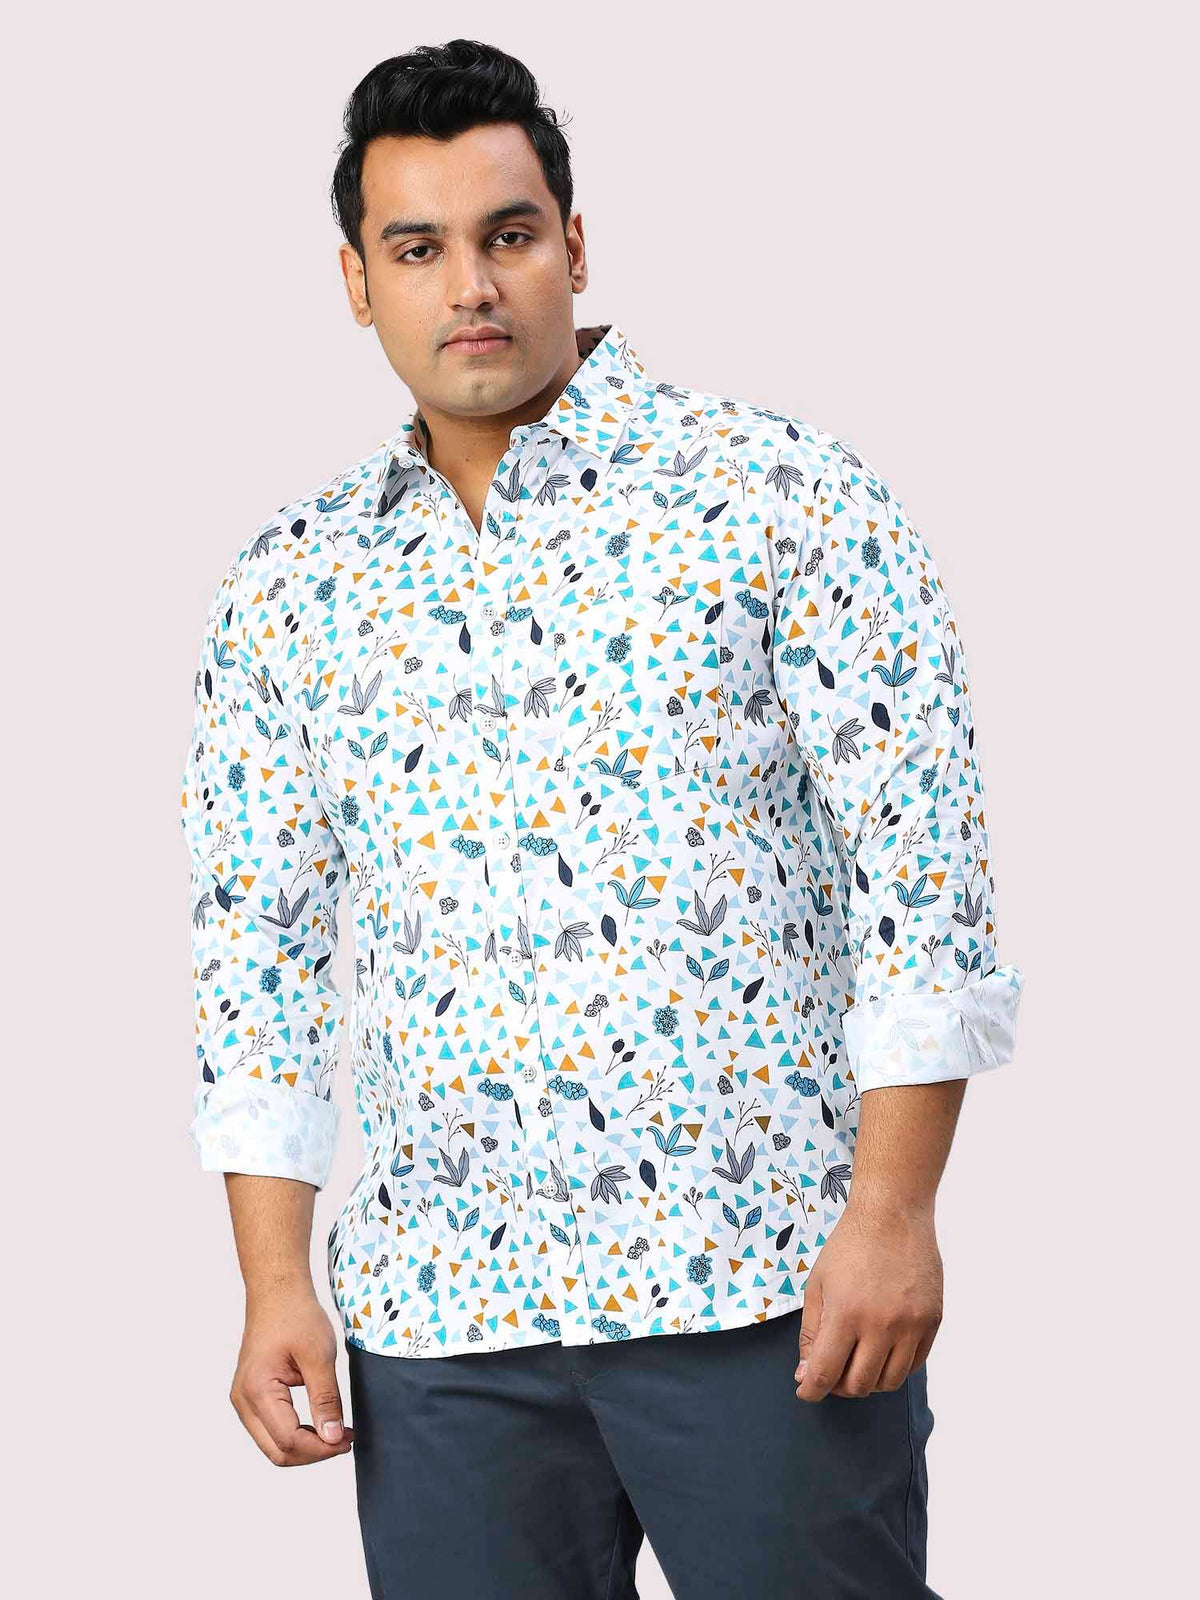 Skytale Digital Printed Full Sleeve Shirt Men's Plus Size - Guniaa Fashions